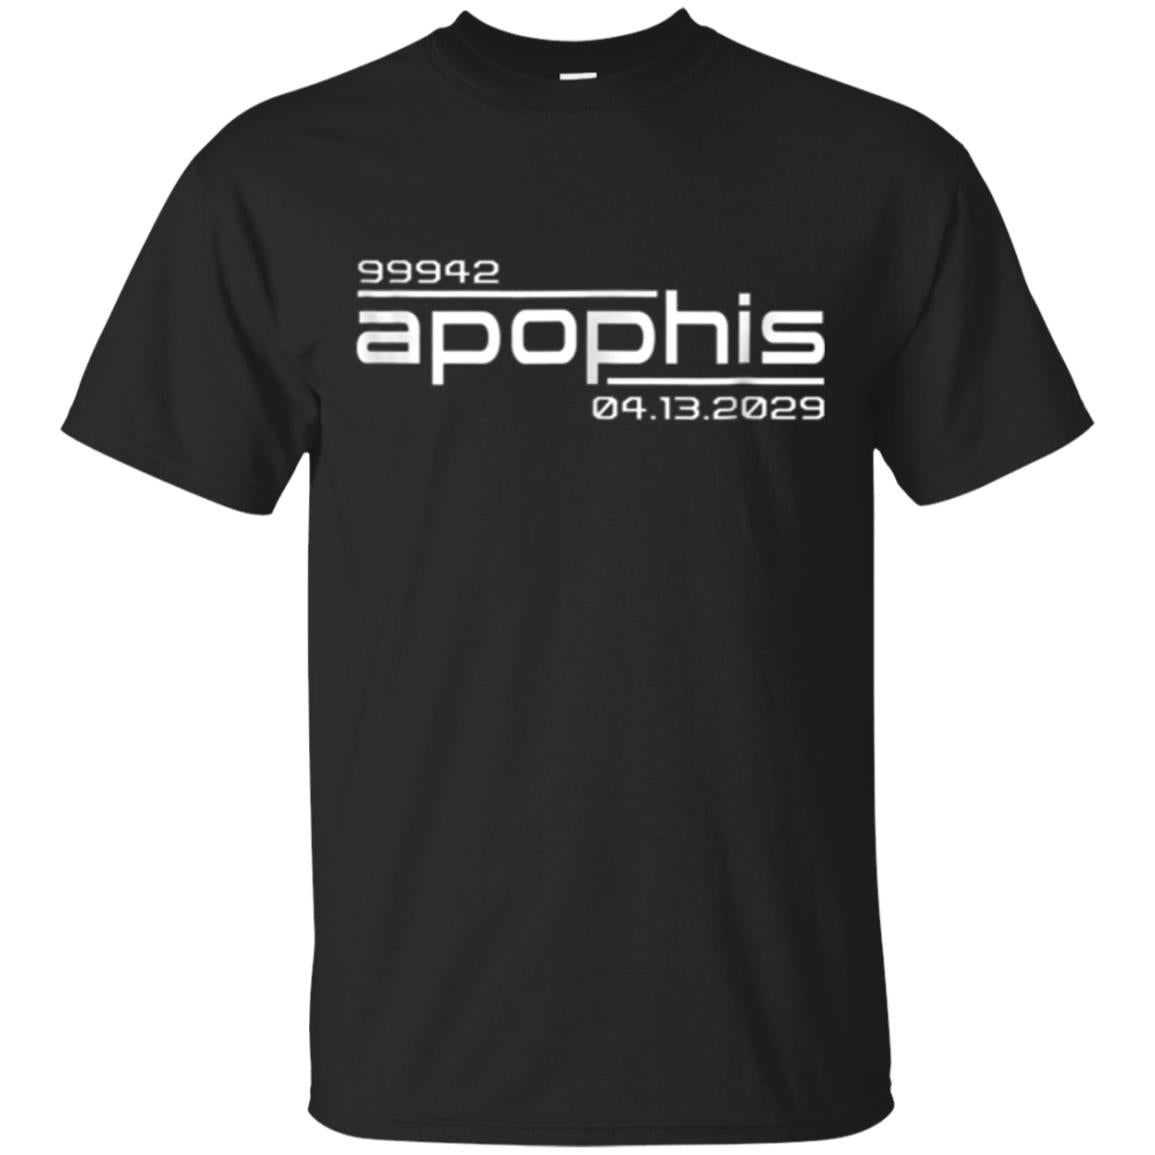 Apophis Near Earth Asteroid April 13 2029 T-shirt